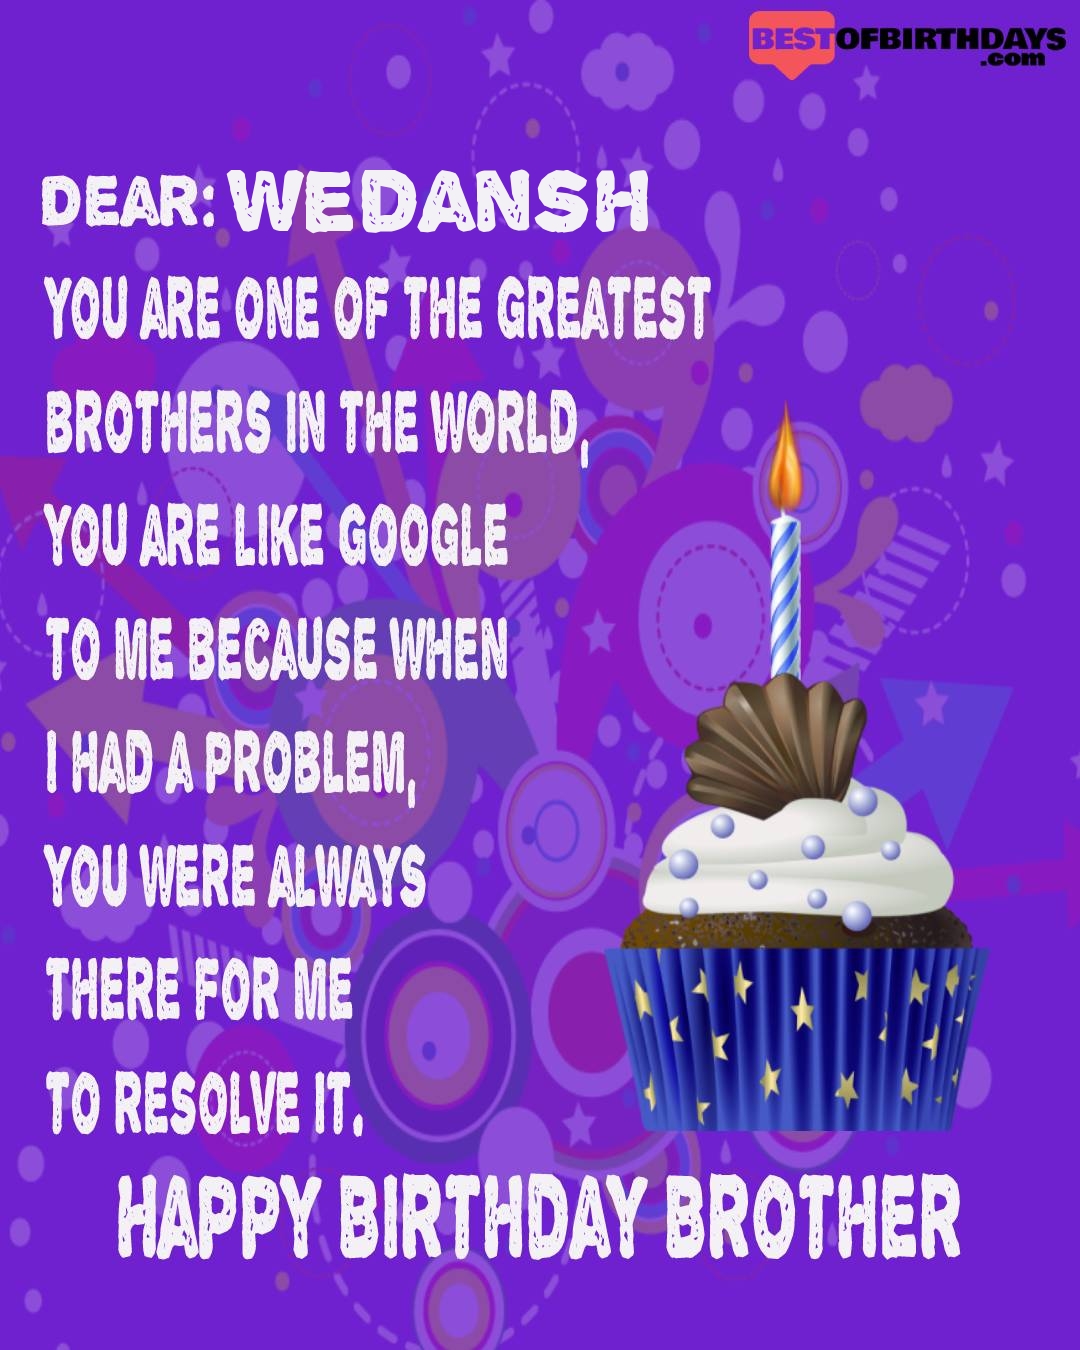 Happy birthday wedansh bhai brother bro